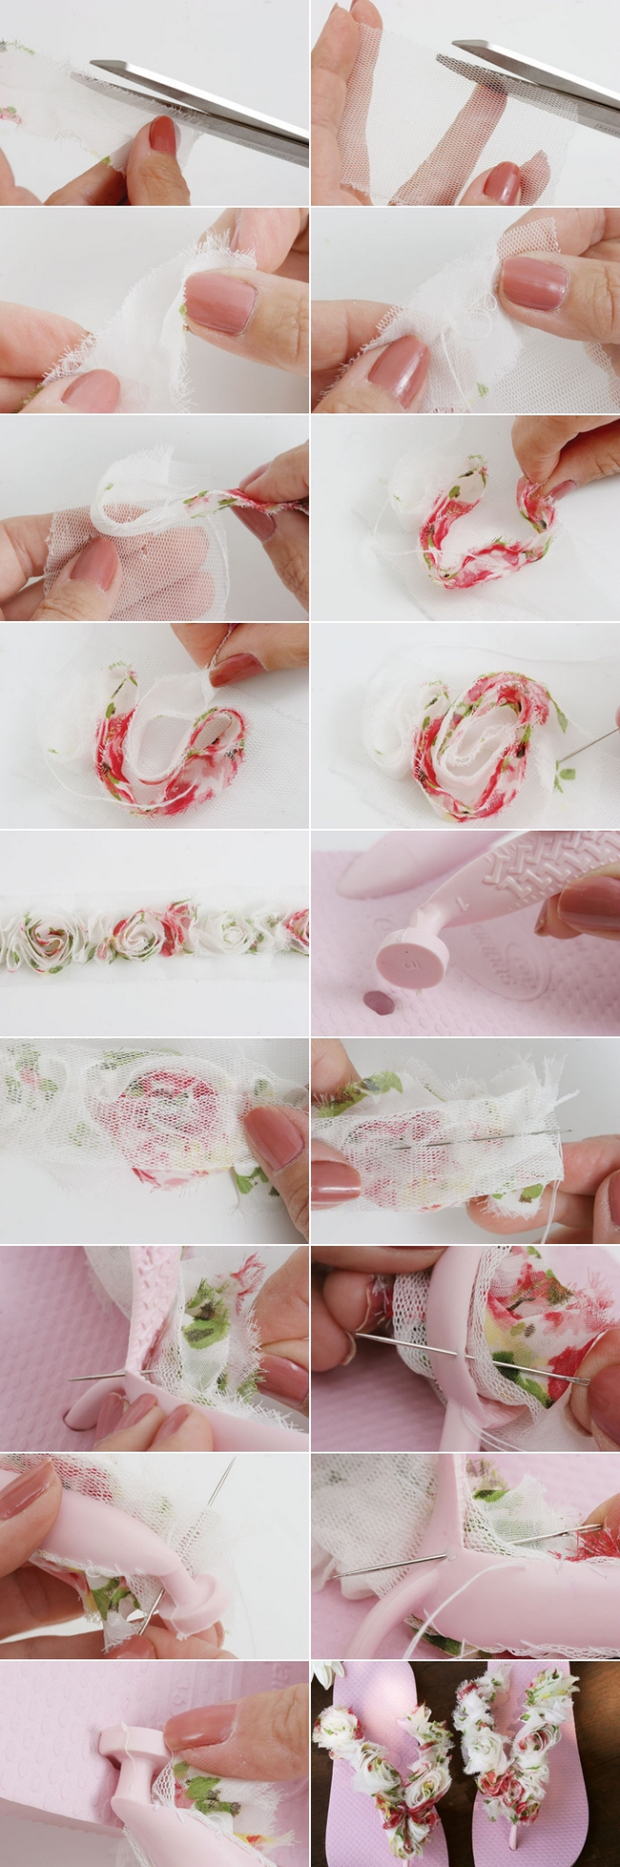 diy-flip-flops-tutorial-light-pink-fabric-scraps-floral-pattern